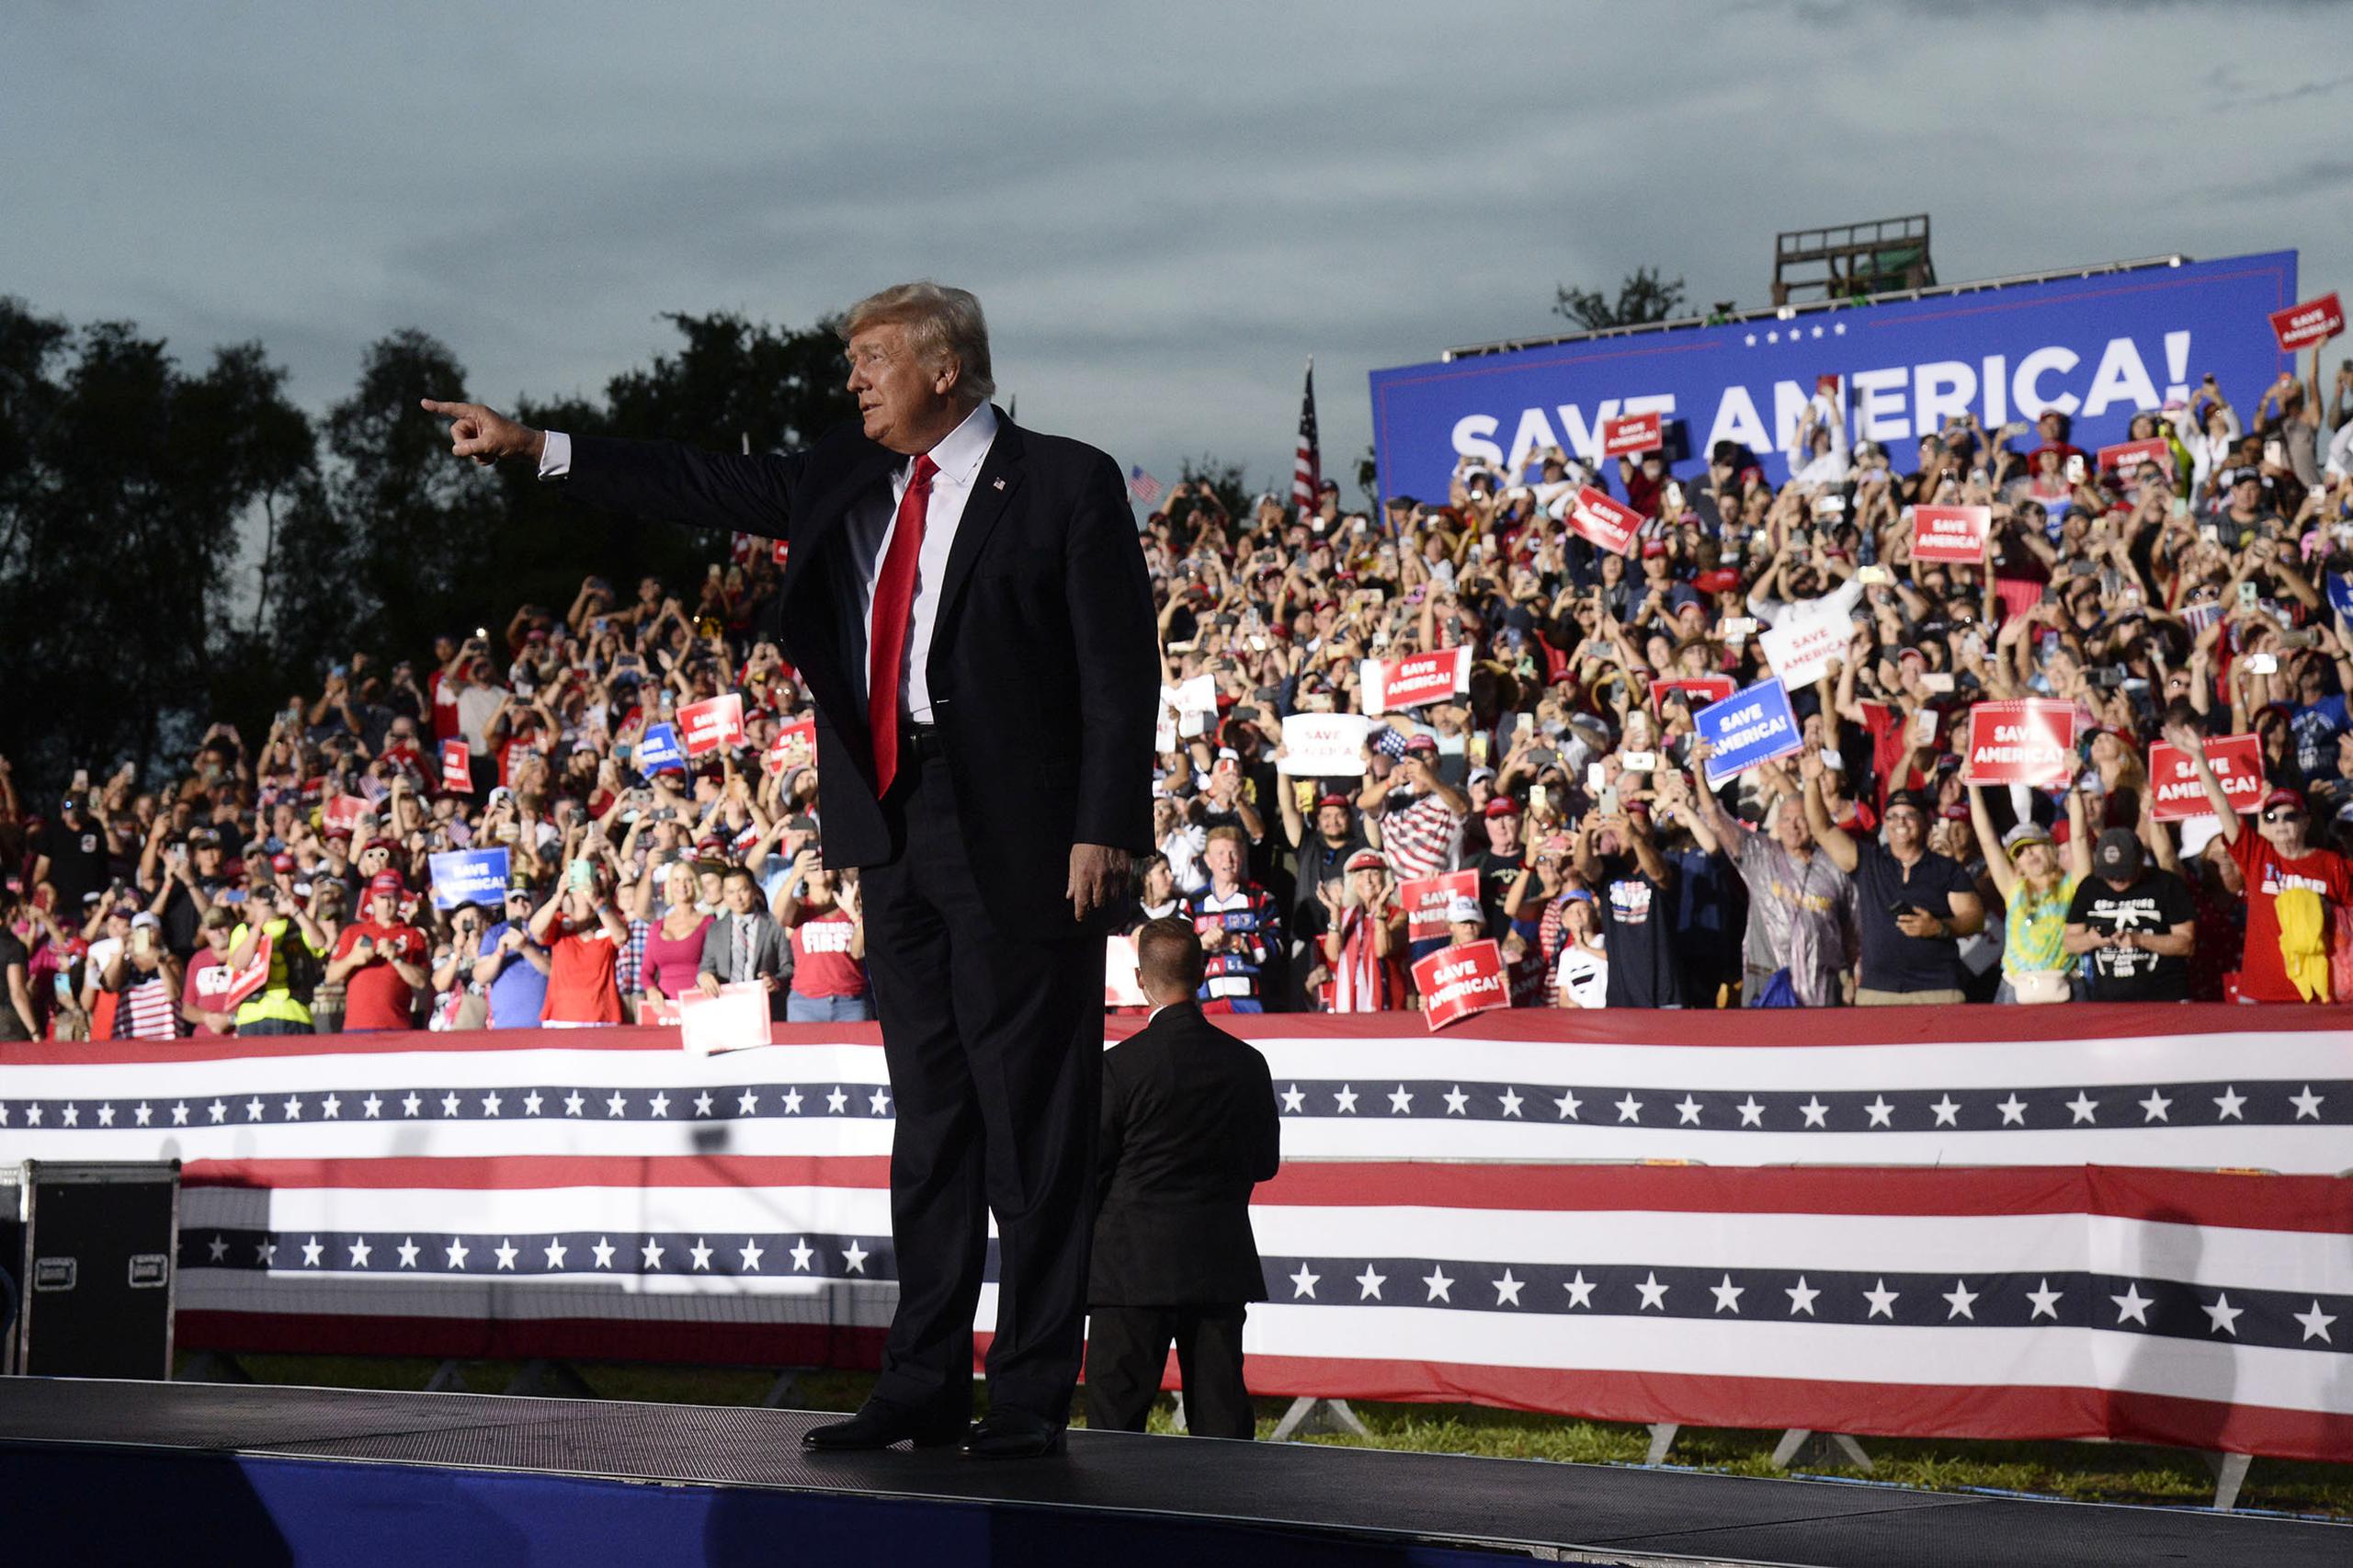 El expresidente Donald Trump camina por el escenario durante un mitin en el Sarasota Fairgrounds, de Sarasota, Florida.